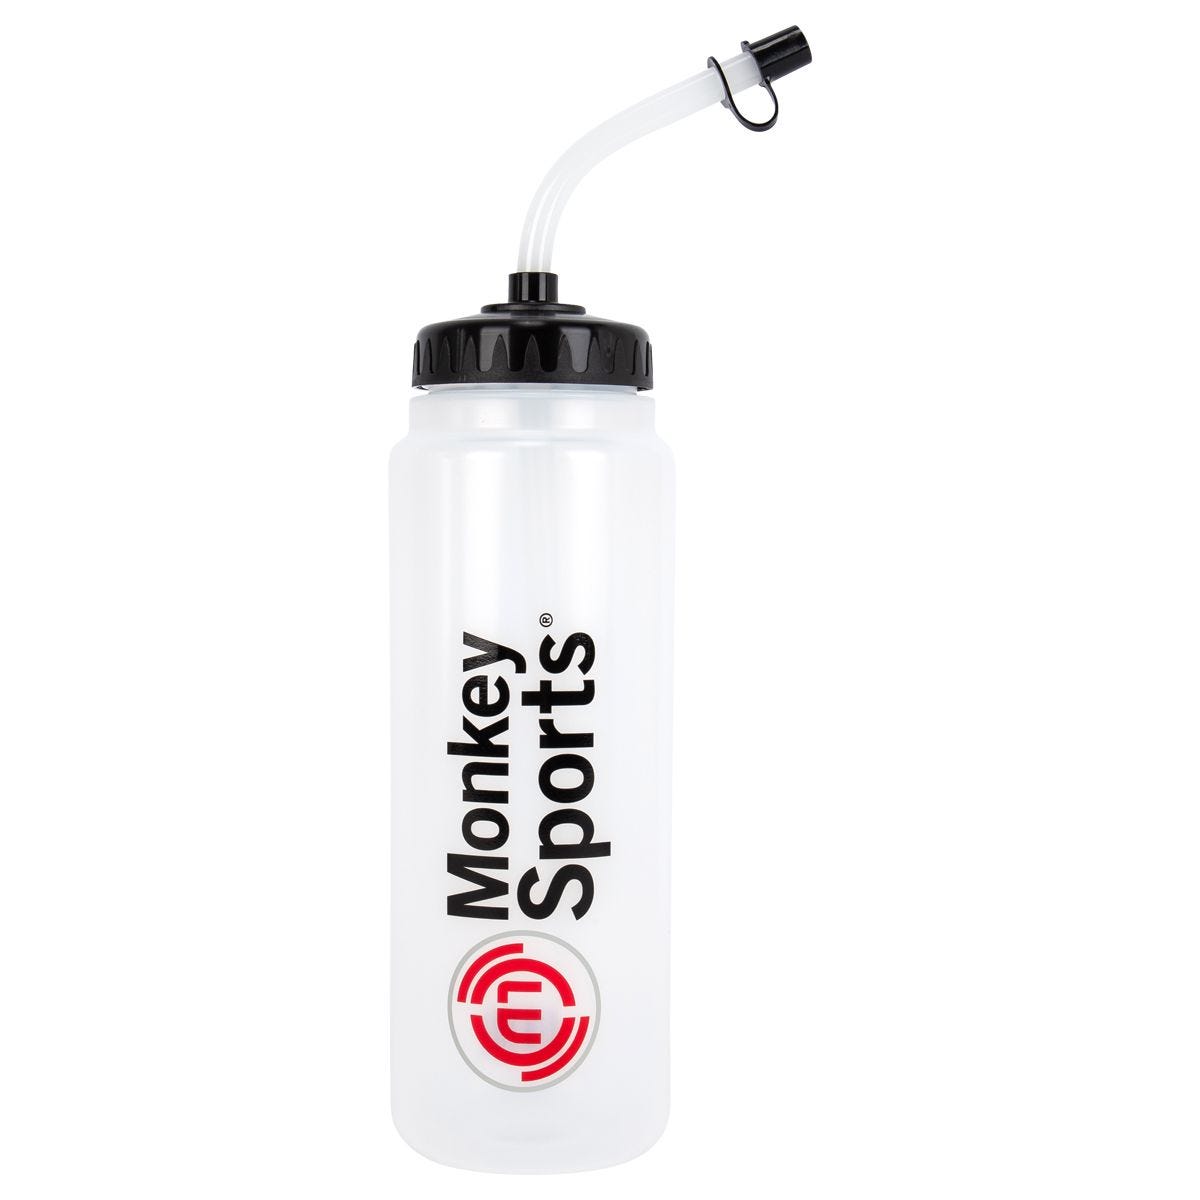 https://www.lacrossemonkey.com/media/catalog/product/cache/a848536da192a0c5bb969d0898e6ec13/c/h/champro-accessories-monkeysports-water-bottle-straw_1.jpg